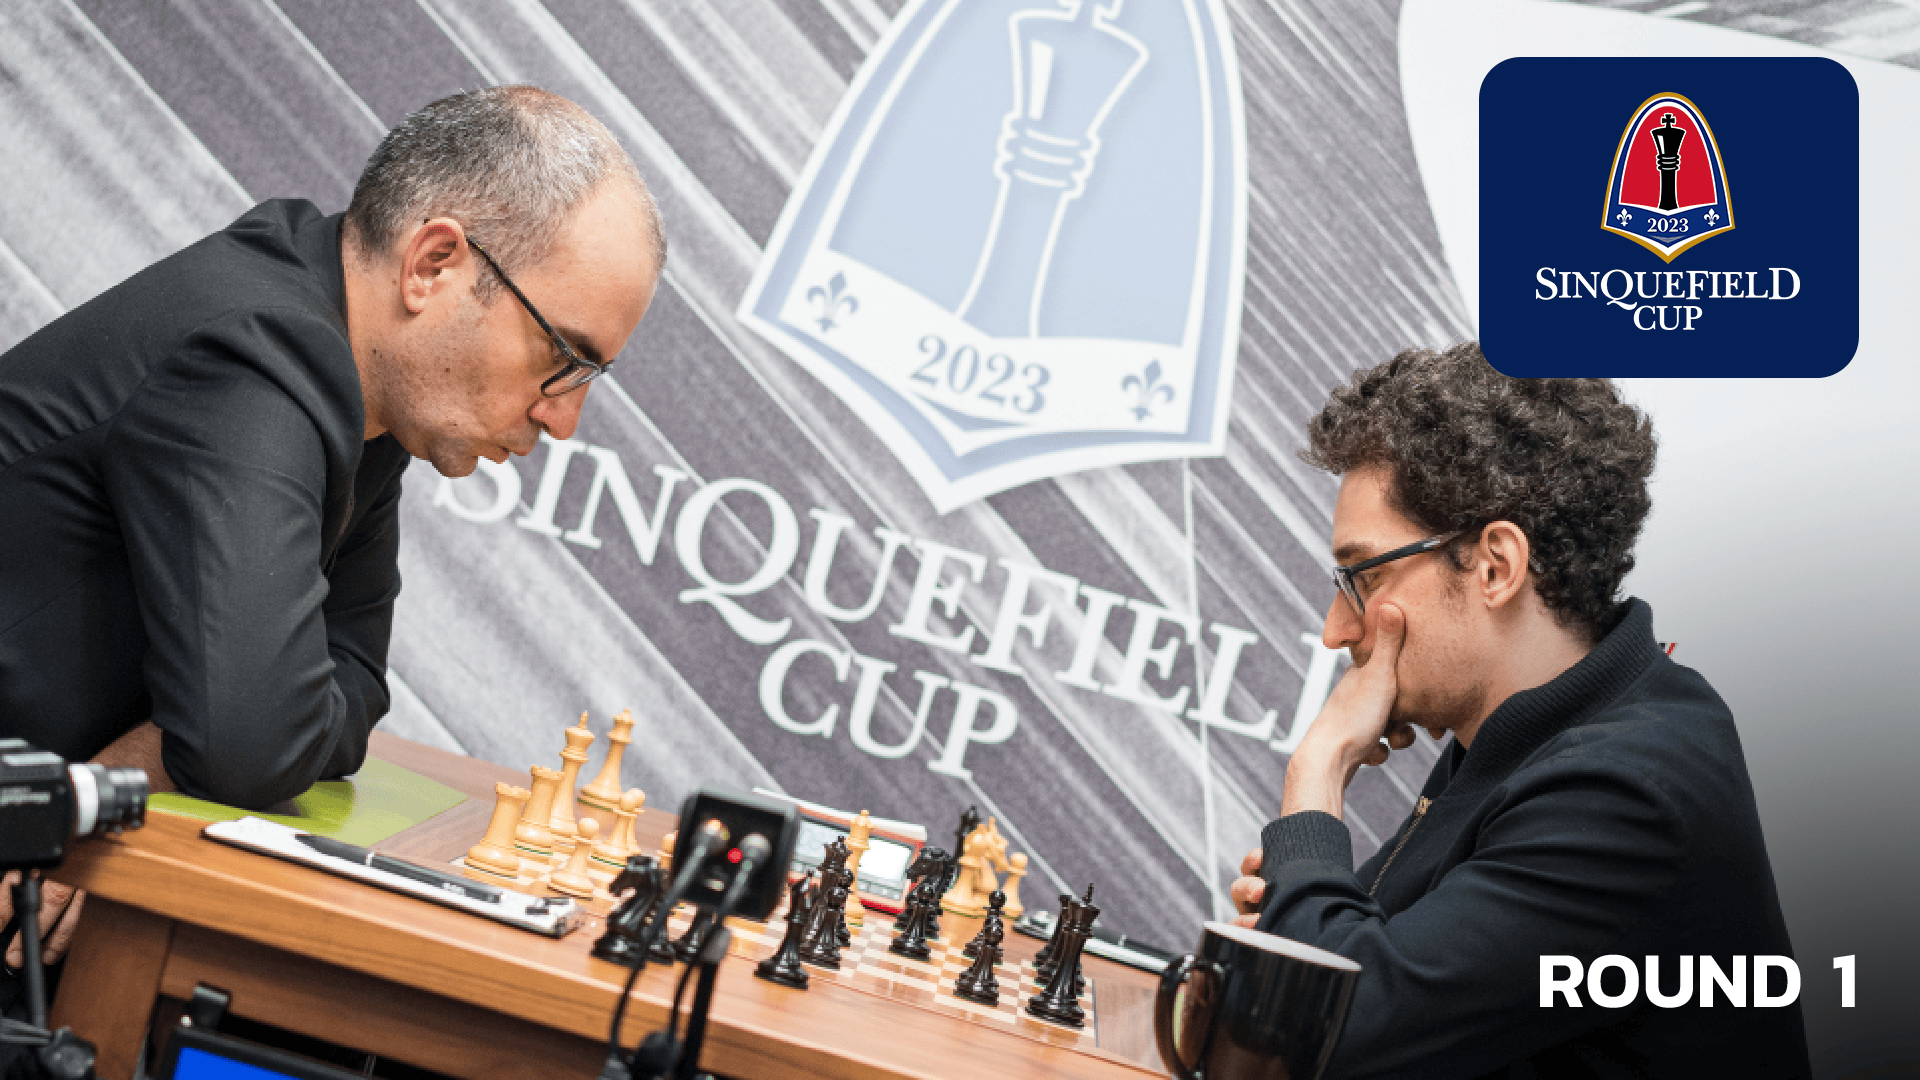 Sinquefield Cup Round 6: So Leads; Caruana, Dominguez Score 1st Wins 